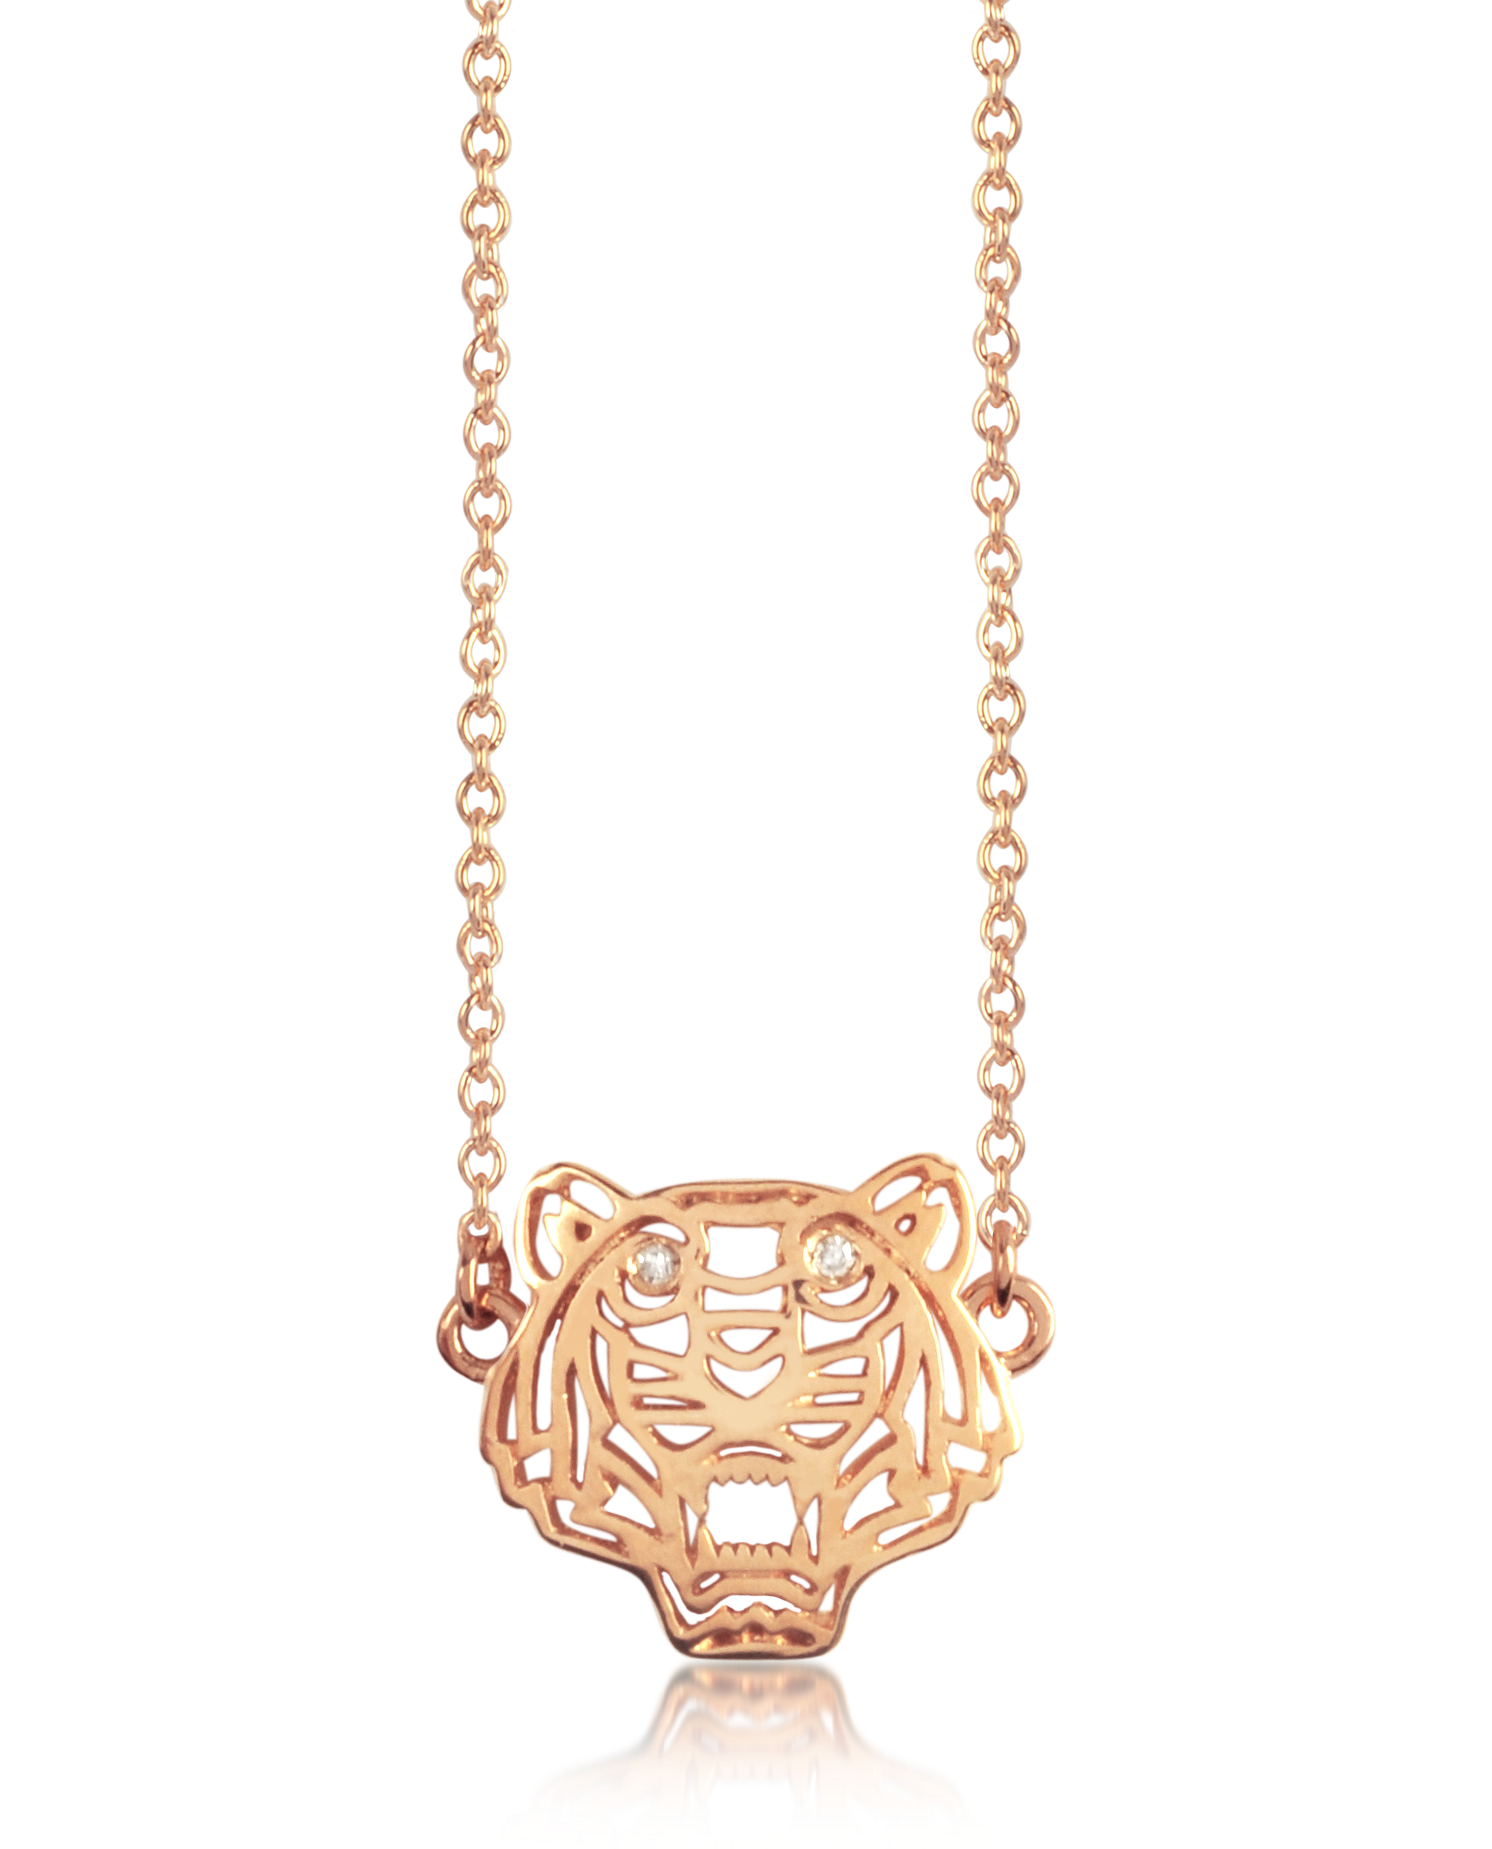 kenzo necklace